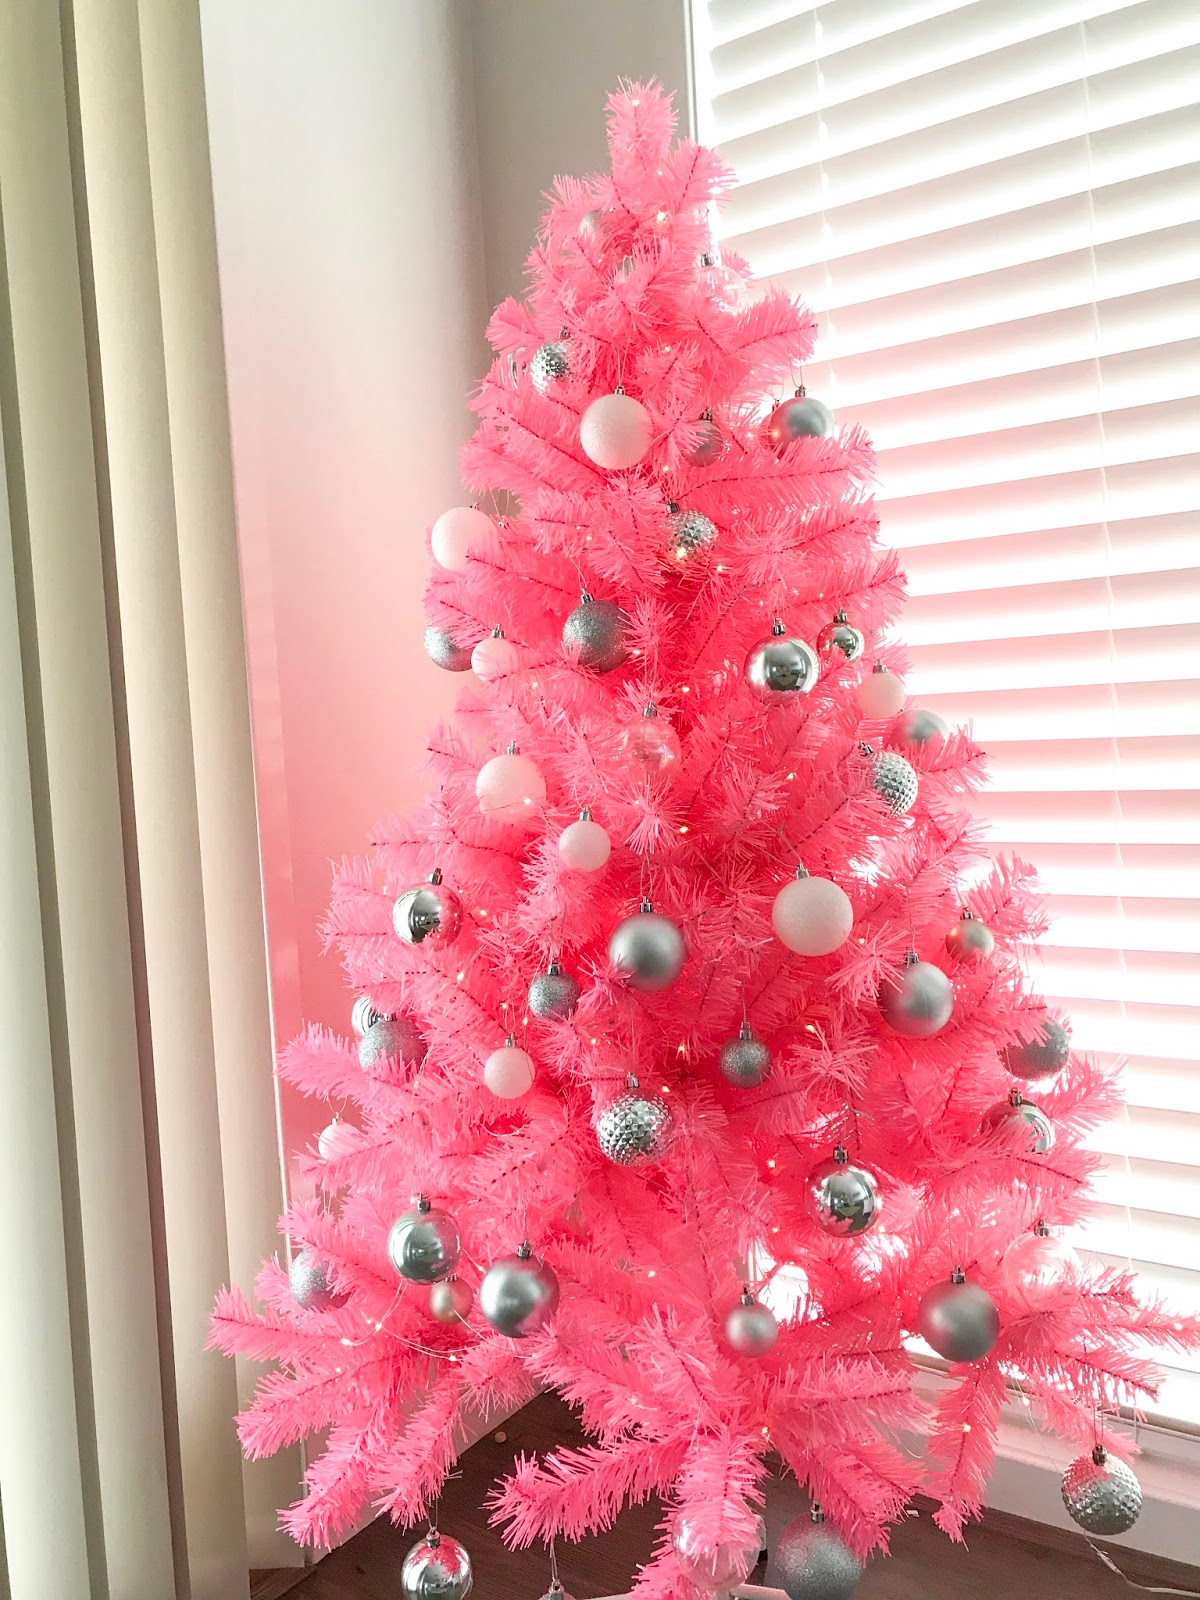 Think Pink The Story Of A Christmas Tree Samelia S Mum